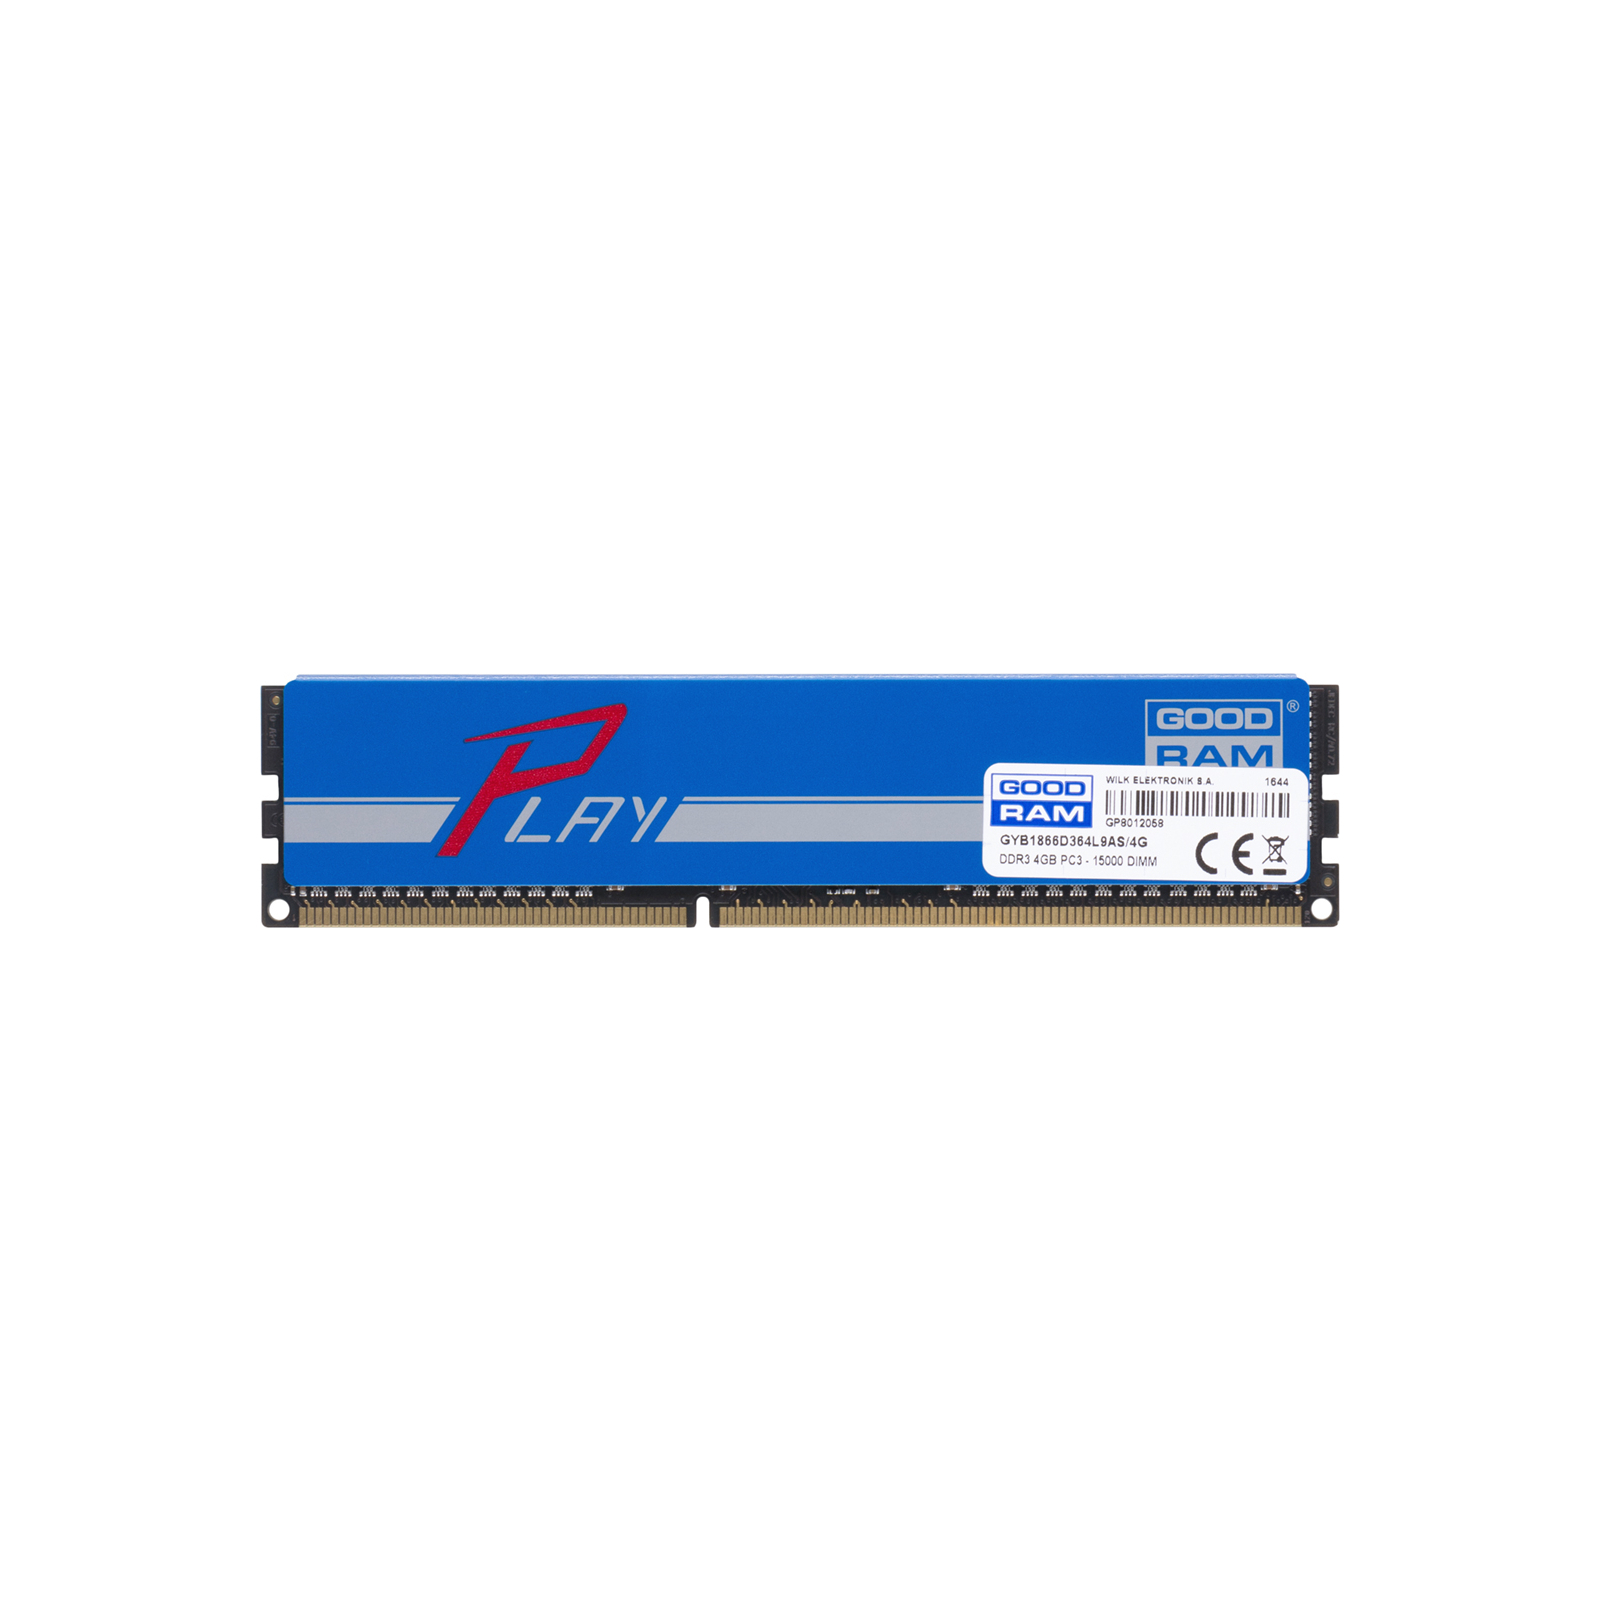 Модуль памяти для компьютера DDR3 4GB 1866 MHz Goodram (GYB1866D364L9A/4G / GYB1866D364L9AS/4G)